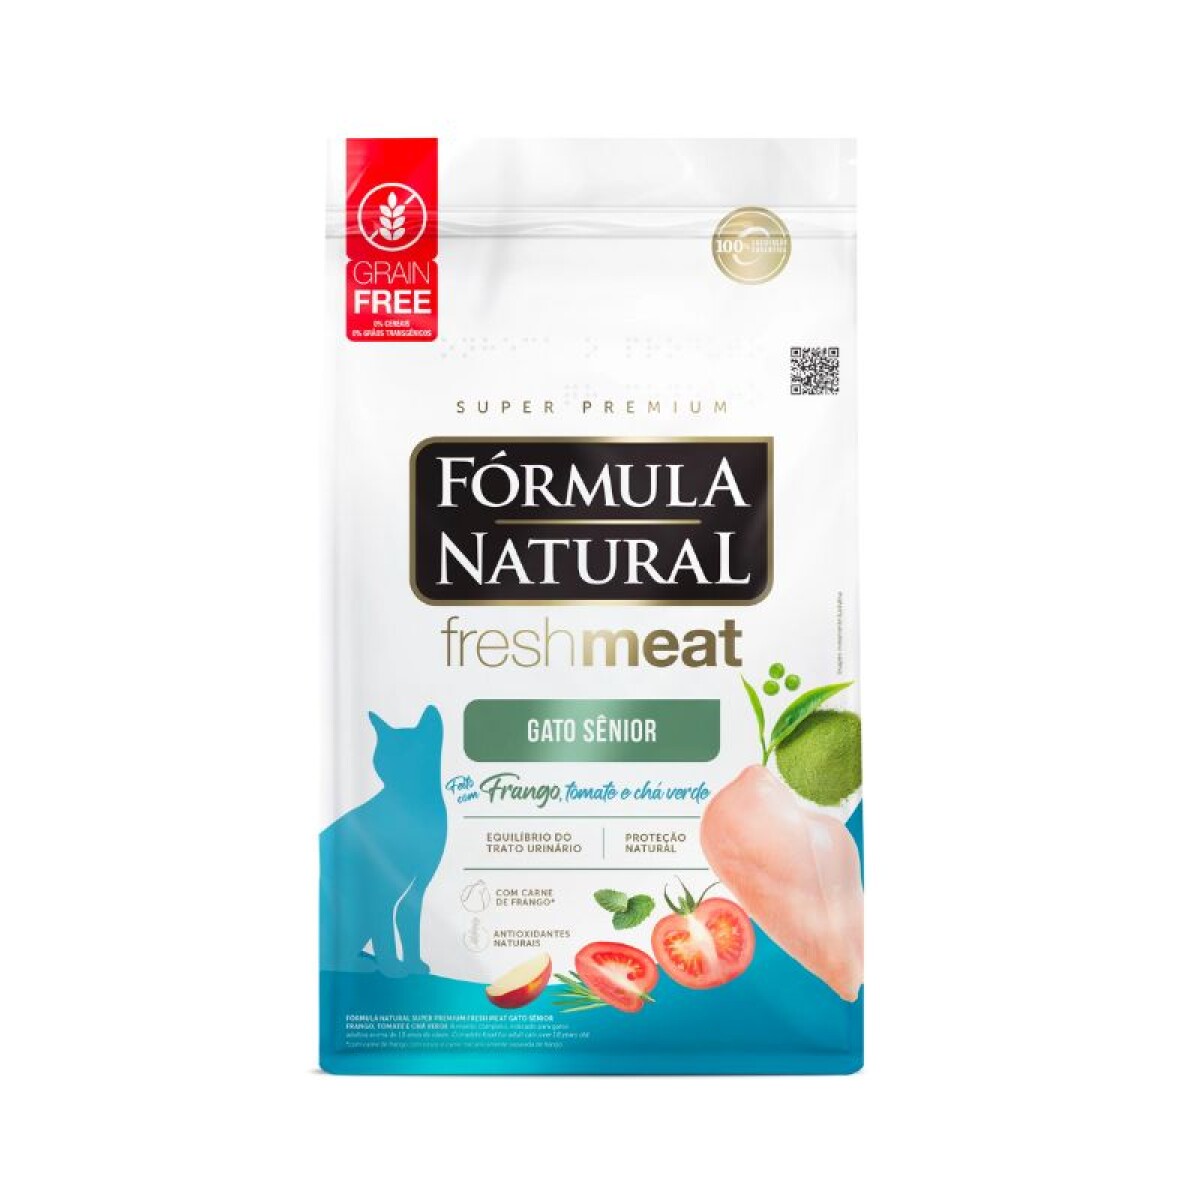 FORMULA NATURAL FRESH MEAT GATOS +7 1KG - Formula Natural Fresh Meat Gatos +7 1kg 